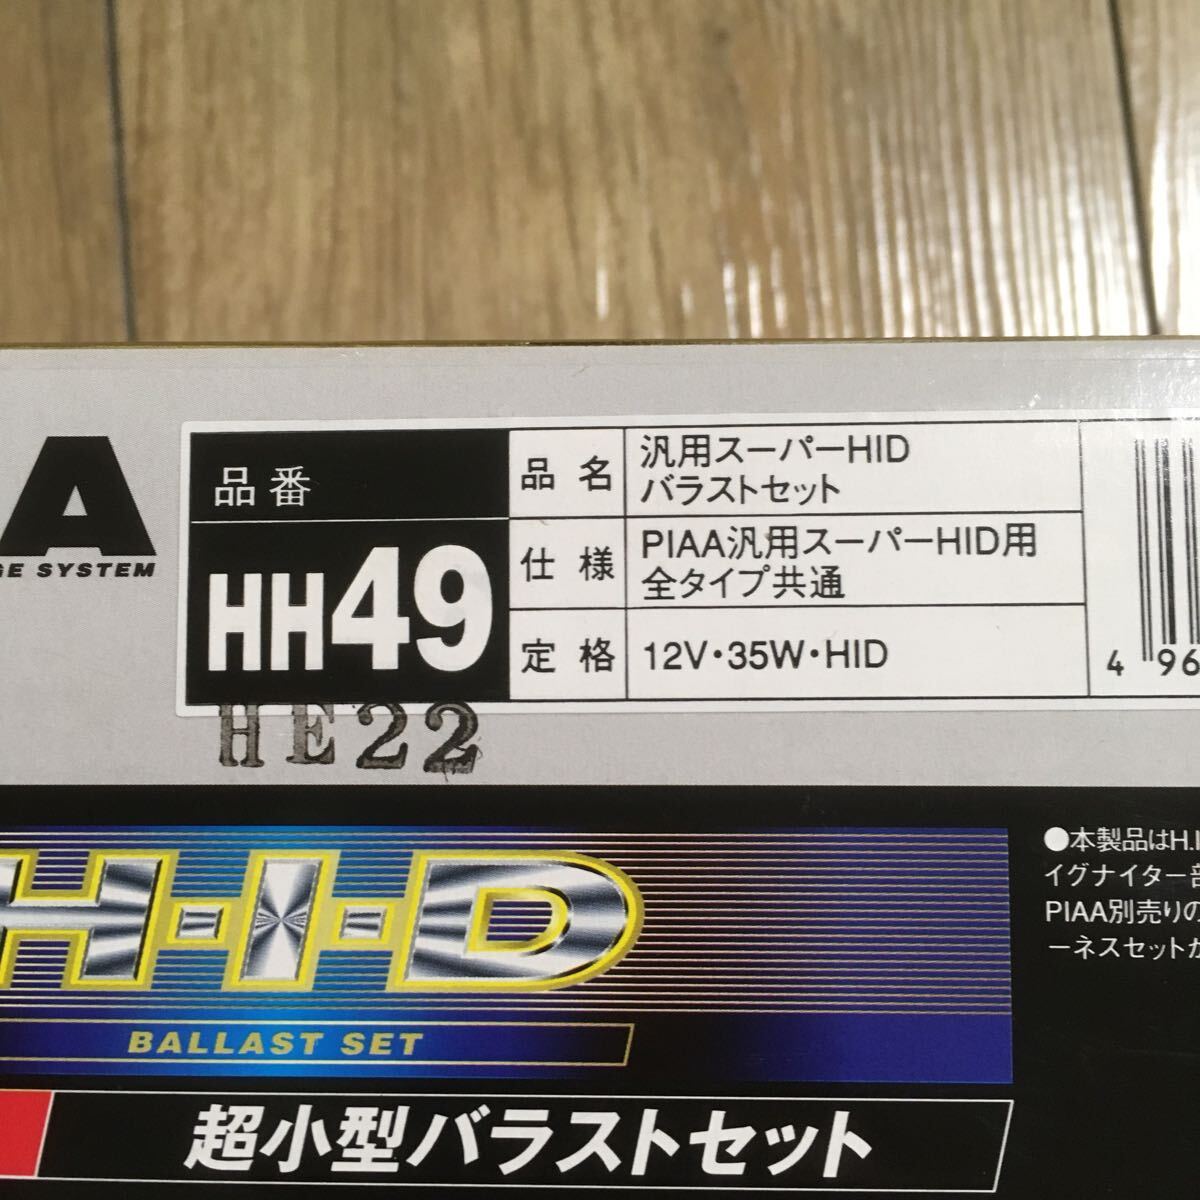 404283850UPG3850 PIAA 超小型バラストセット 高性能 HH49 12V 35W HID 汎用 ピア PIAA製最強バラスト 長期保管品 未使用_画像2